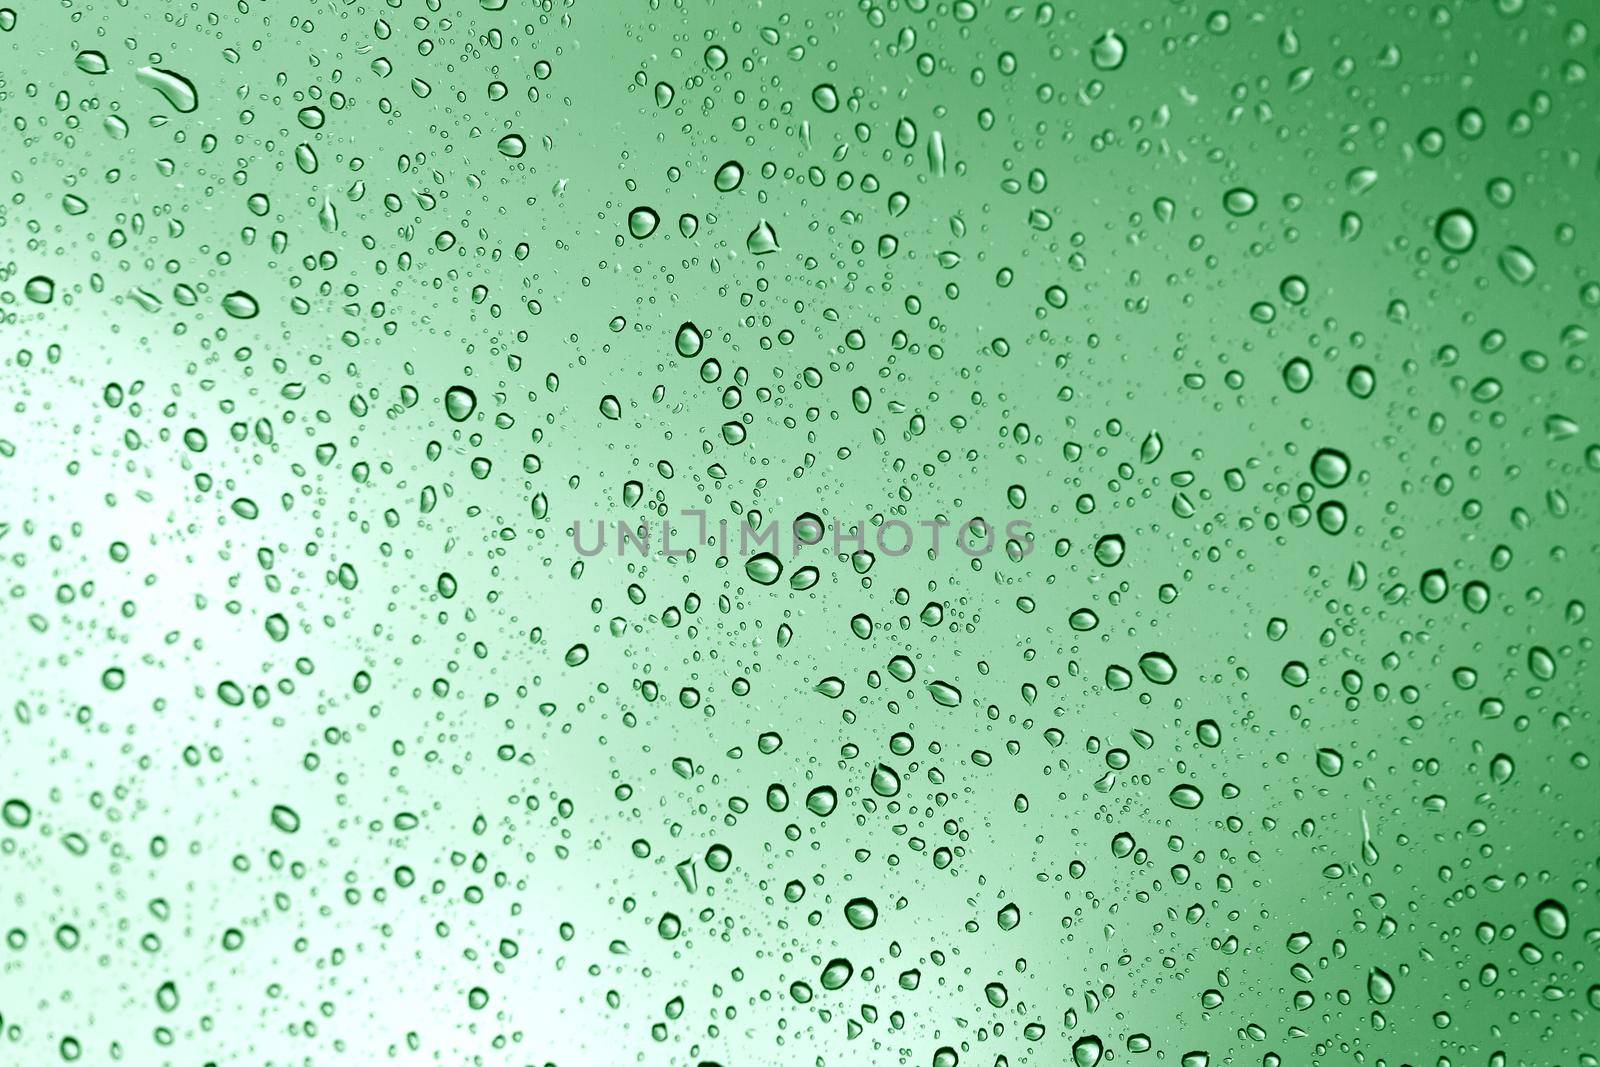 Rainy water drop green on glass mirror background. by jayzynism